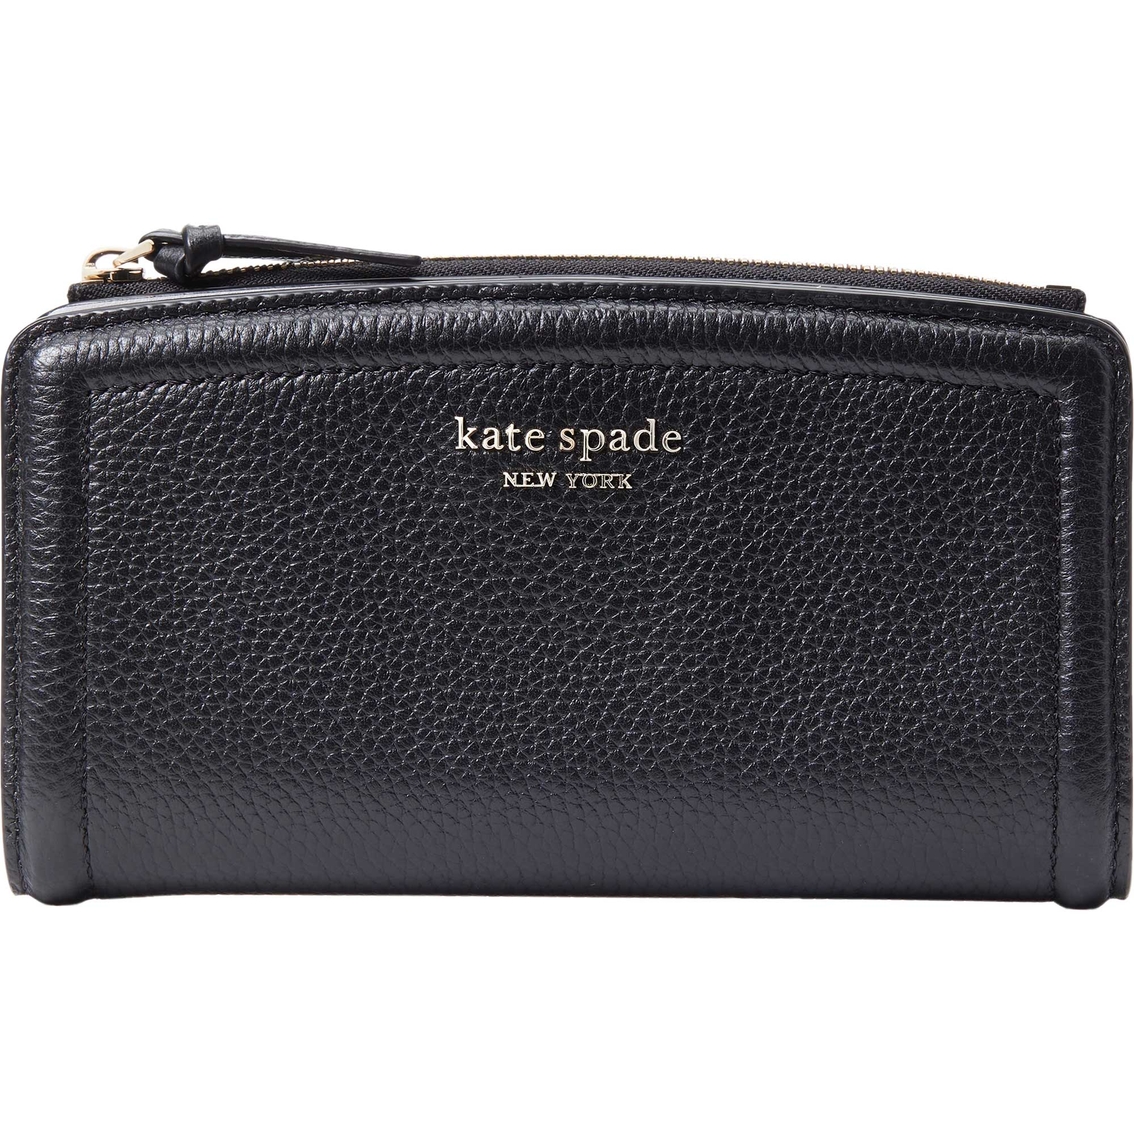 Kate Spade New York Knott Pebbled Leather Zip Slim Wallet - Image 1 of 2